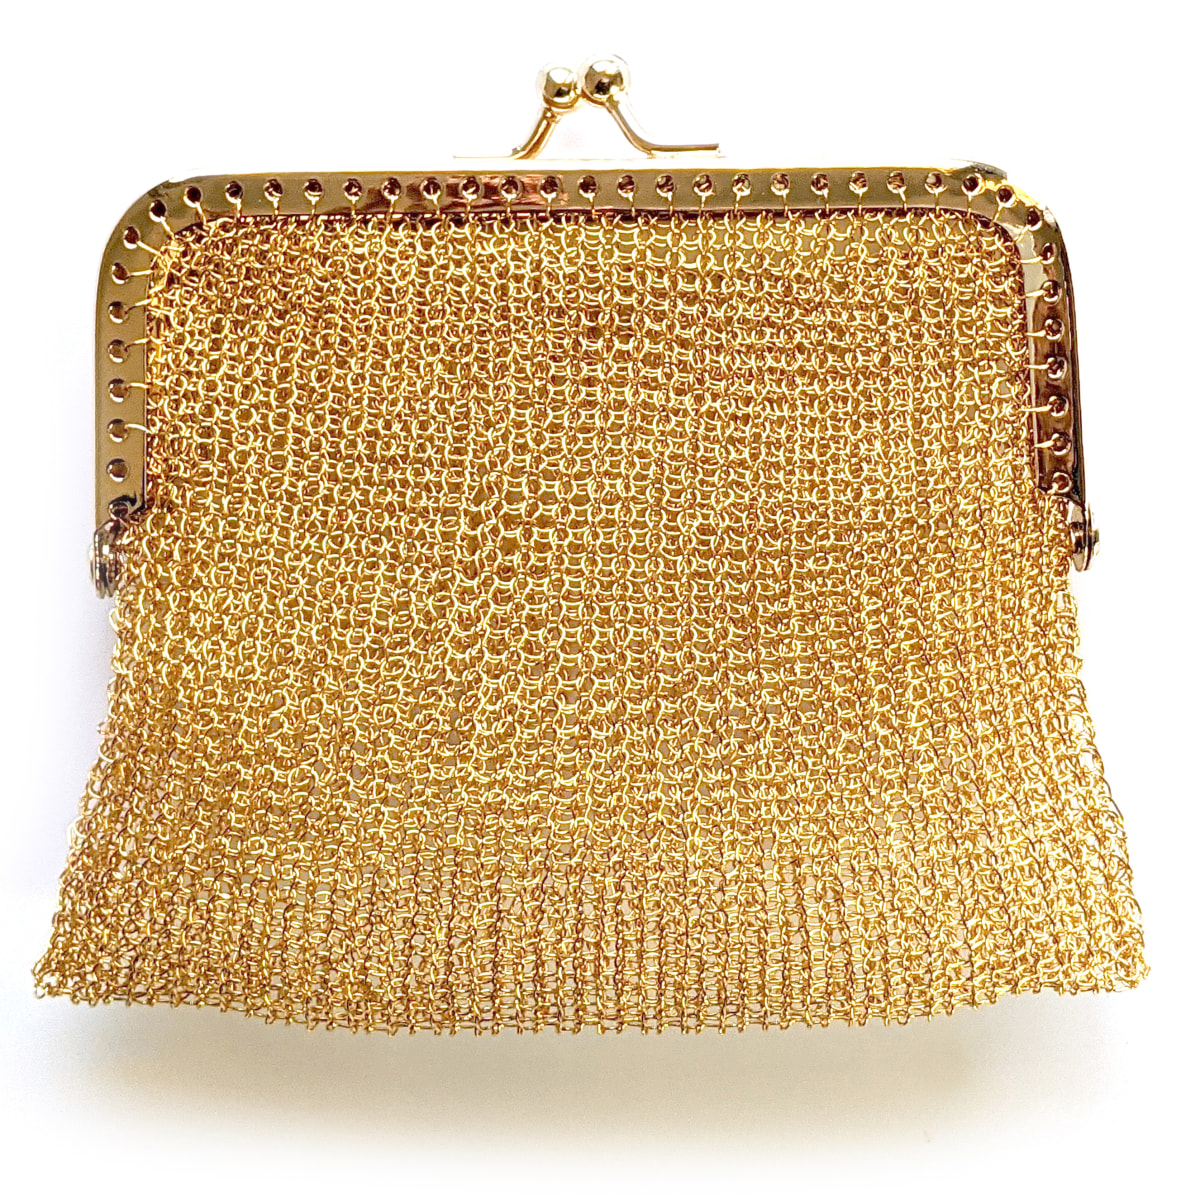 Wire crochet artistic looking purse | Domestika